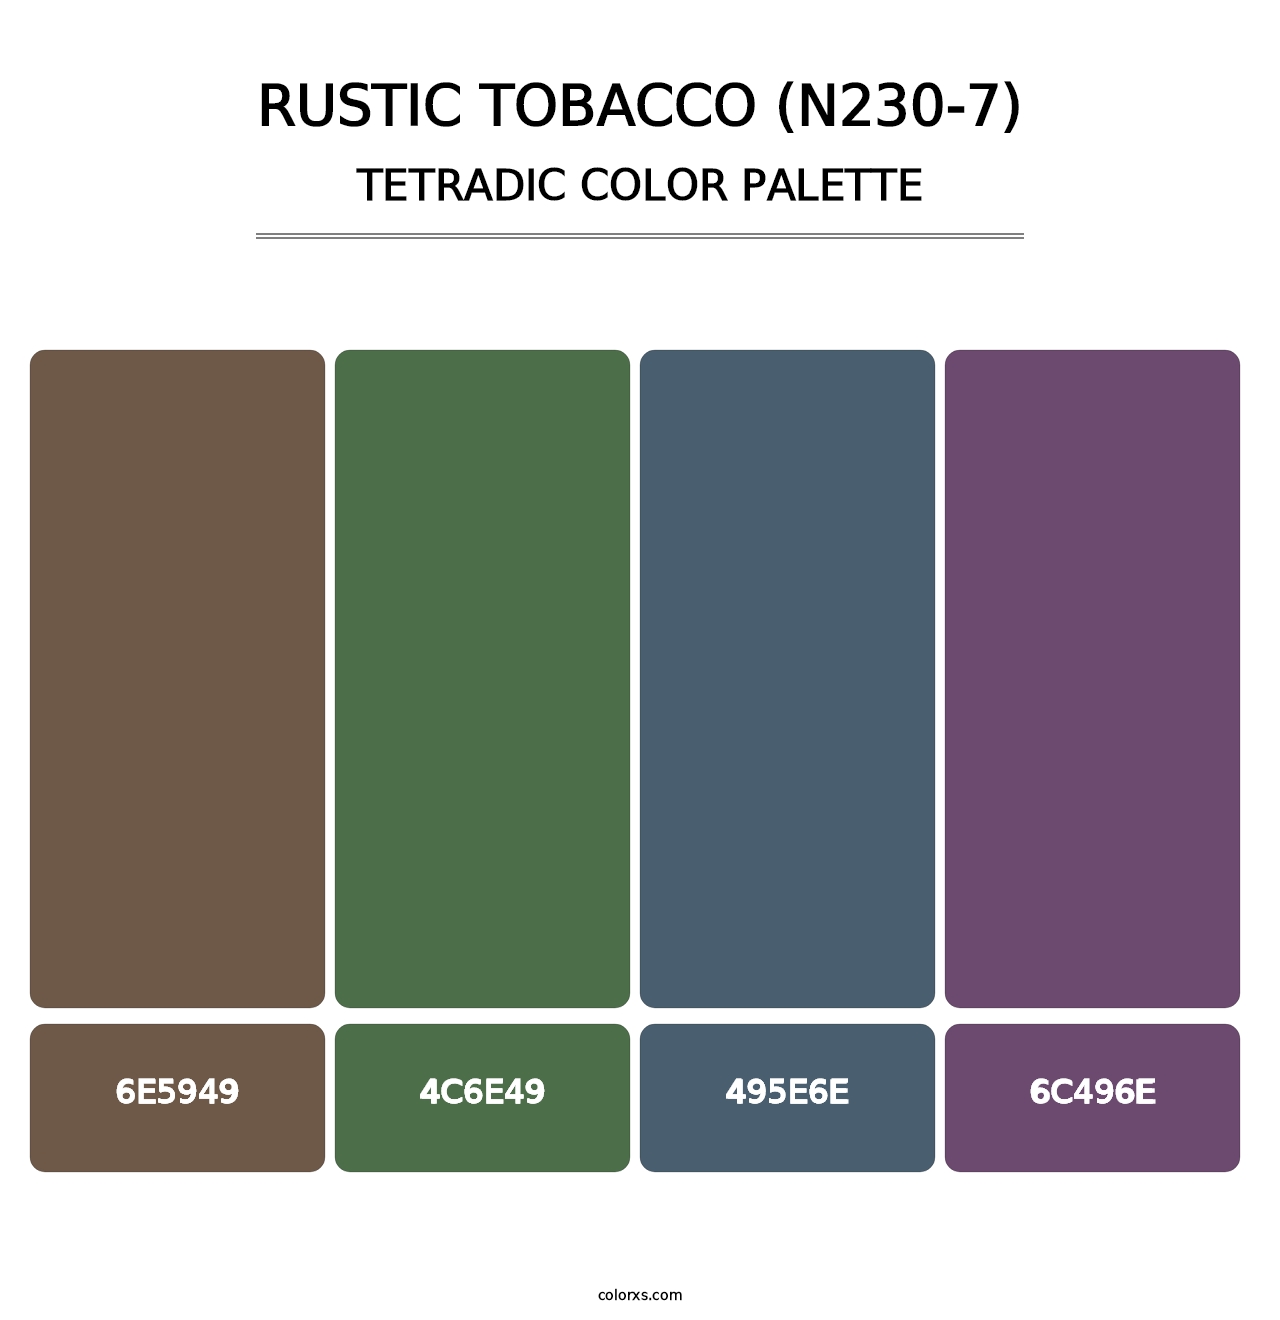 Rustic Tobacco (N230-7) - Tetradic Color Palette